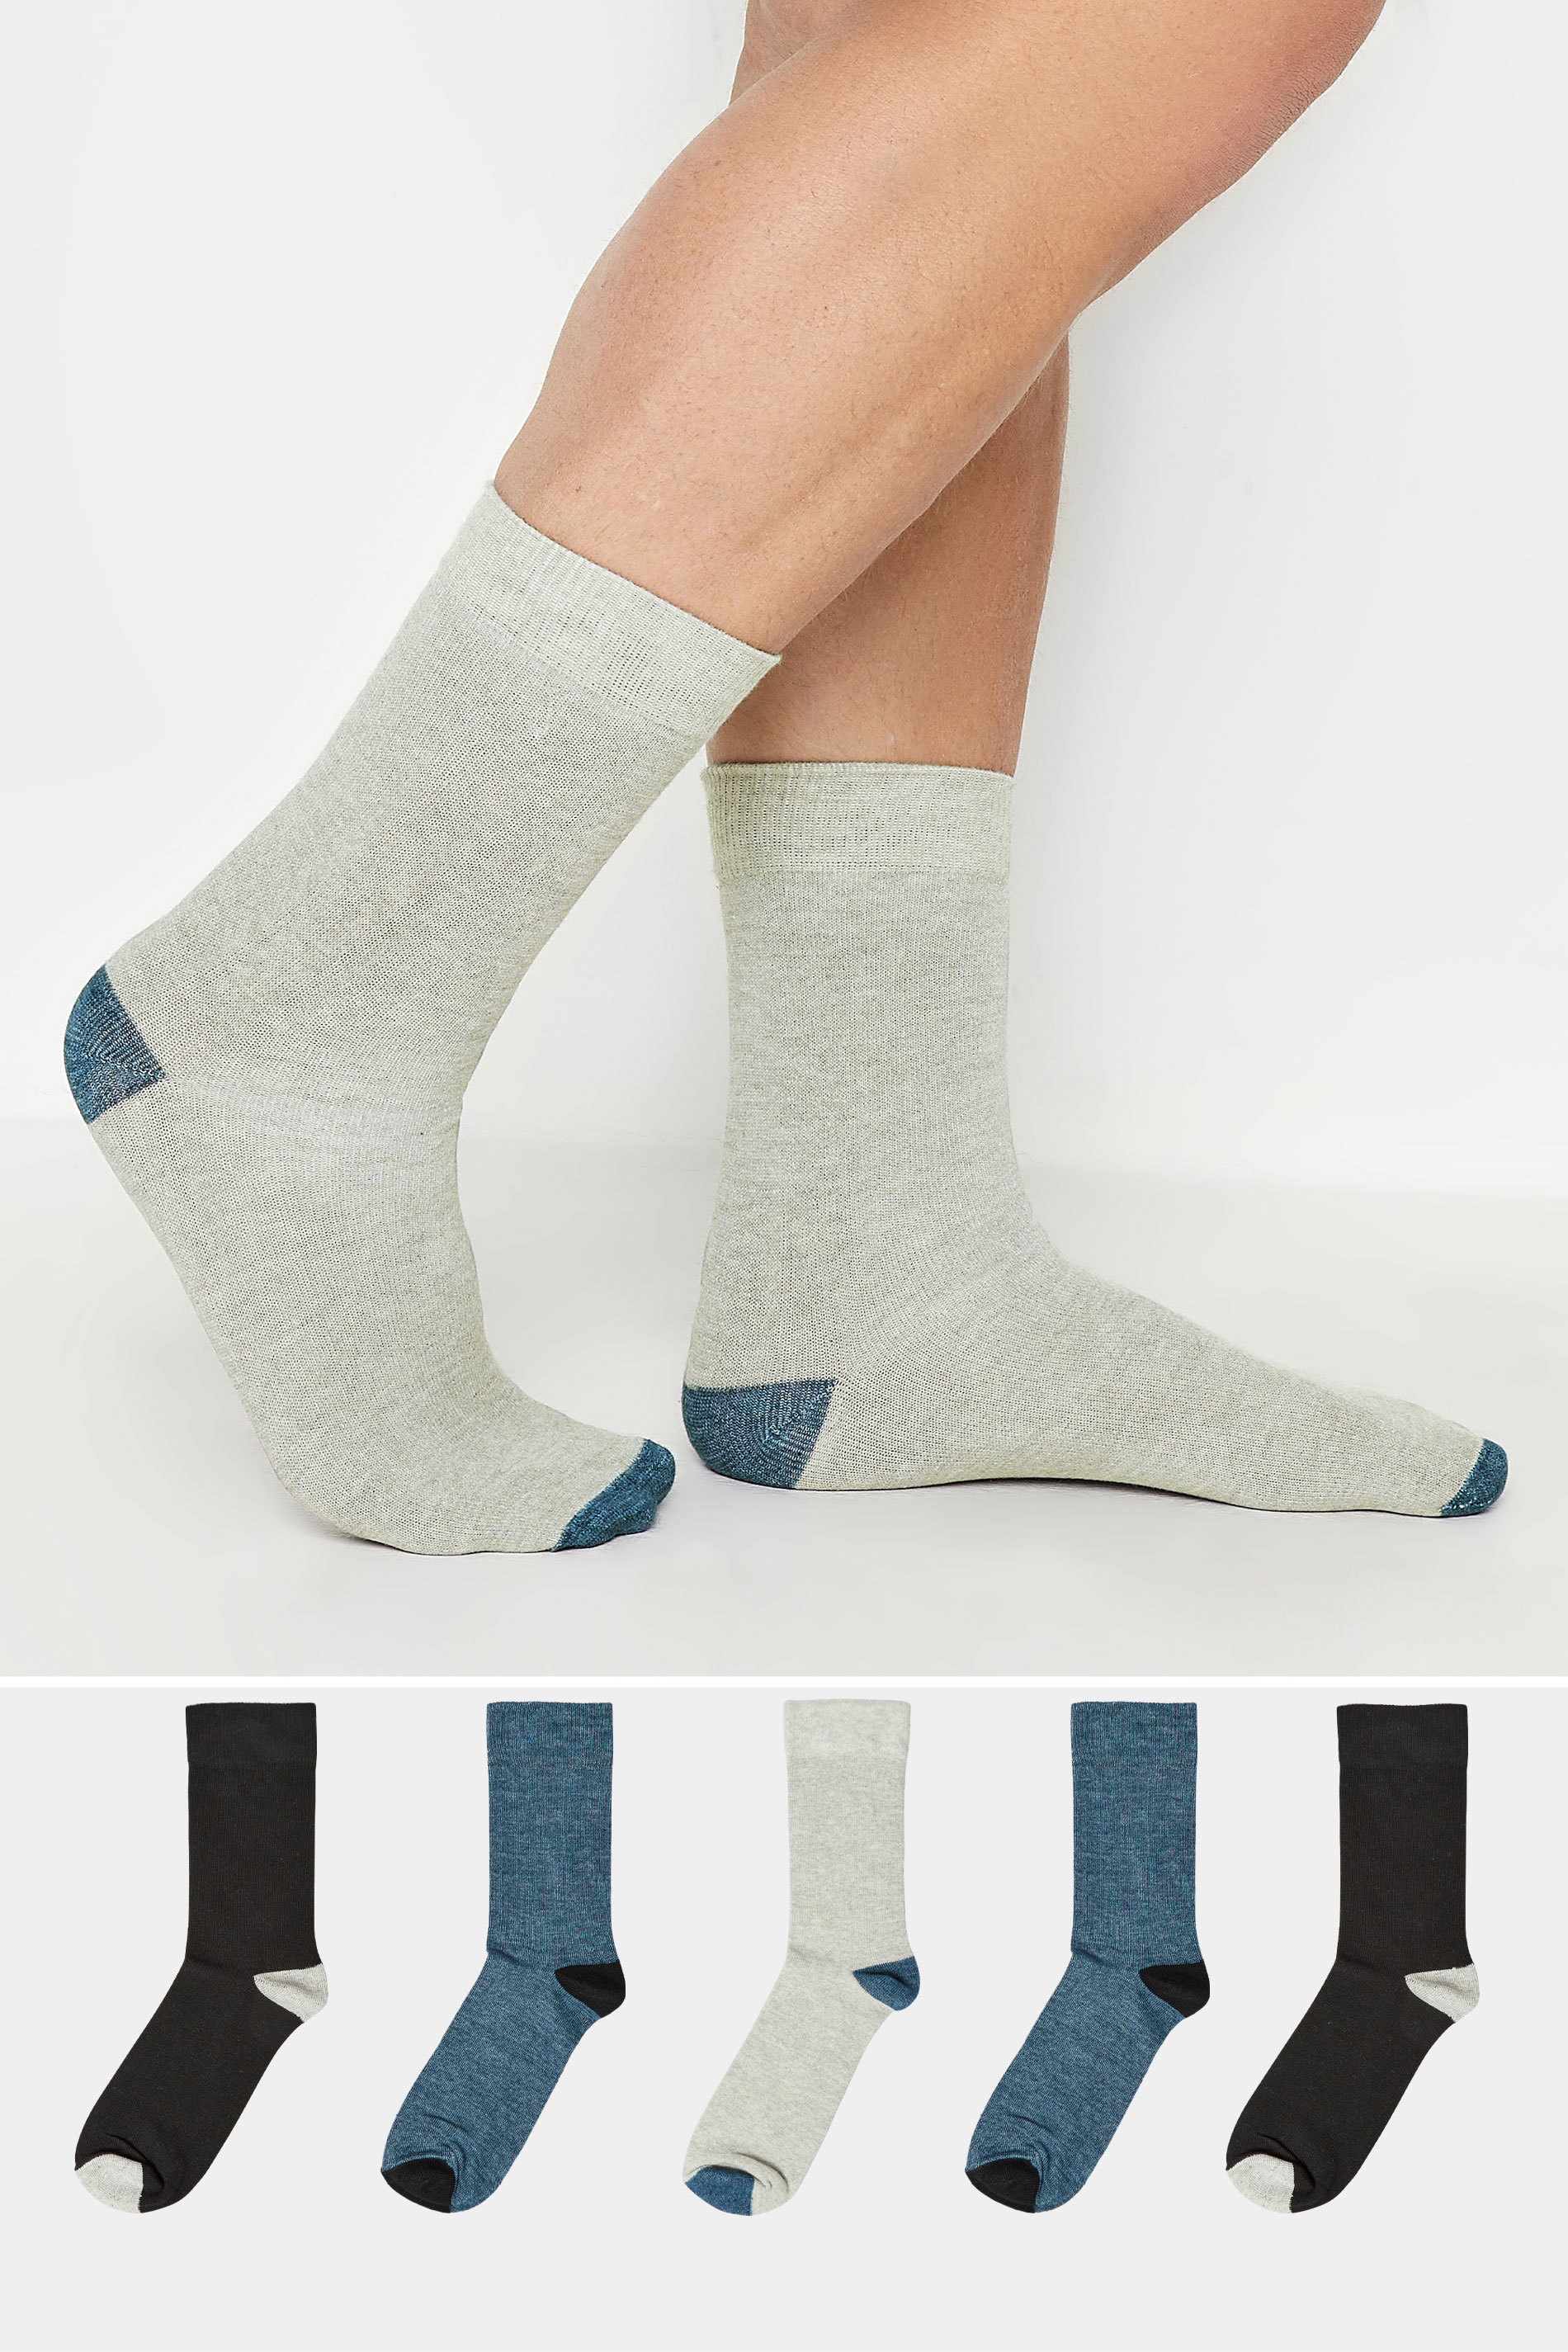 BadRhino Blue 5 Pack Heel & Toe Socks | BadRhino 1